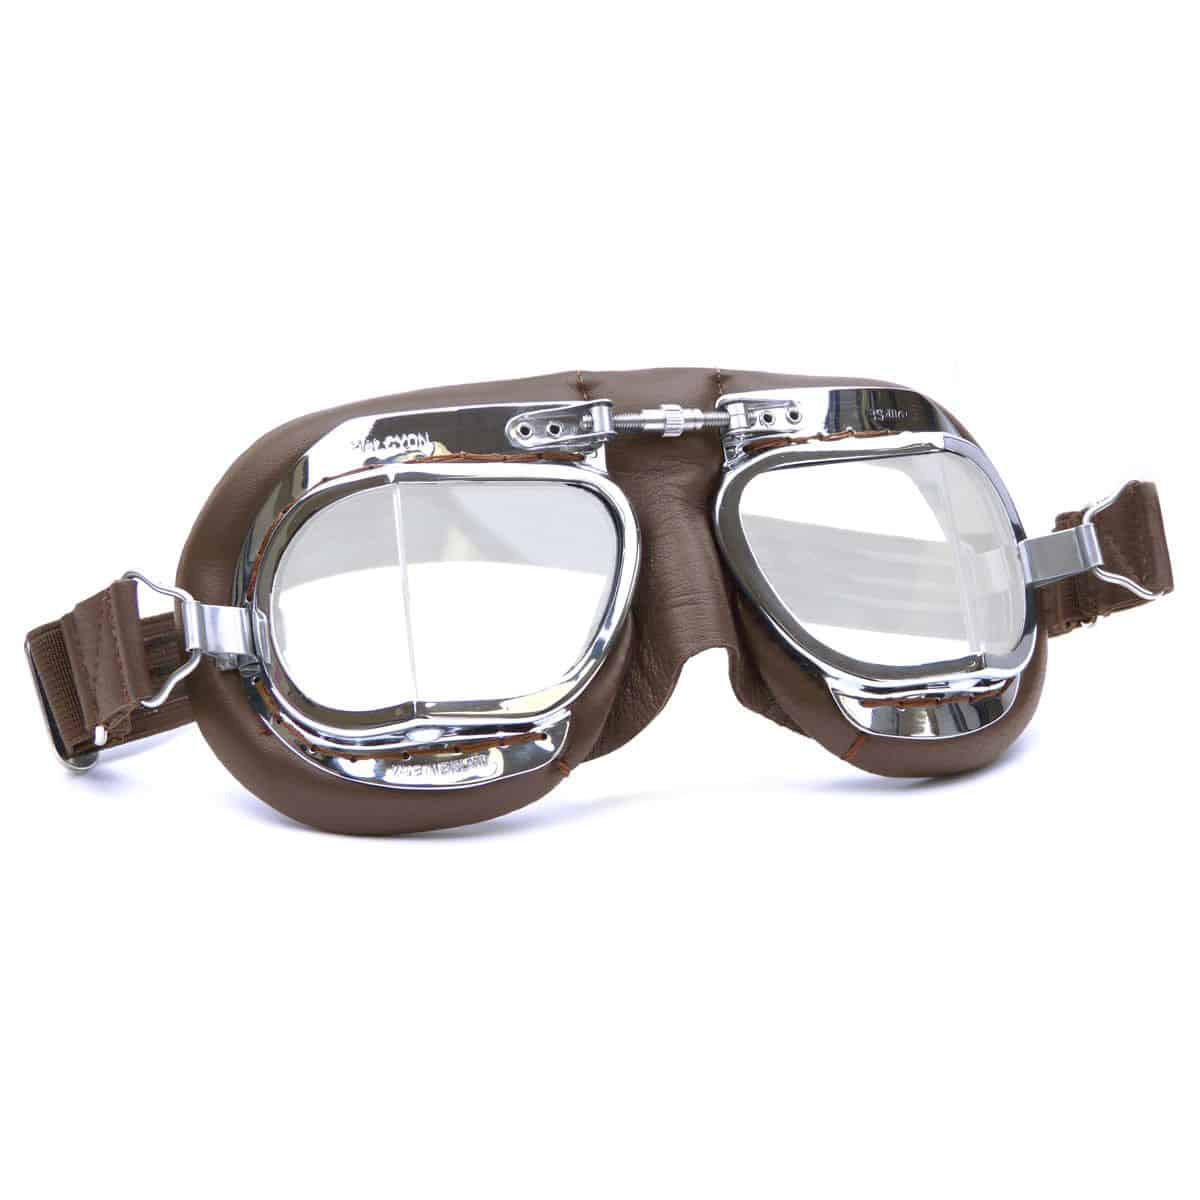 Halcyon-mark-49-goggles-brown